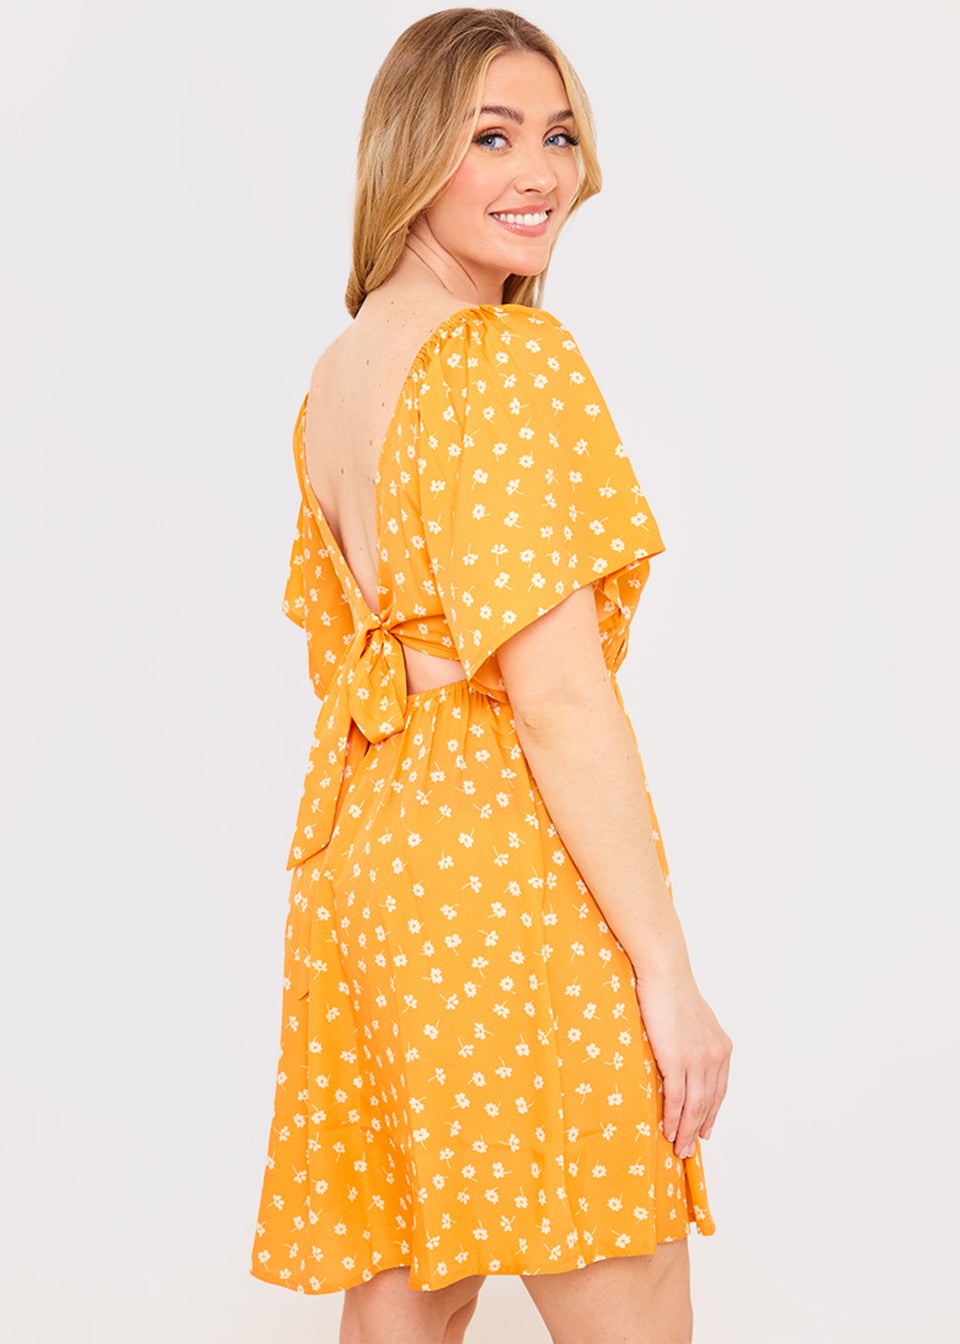 In the Style Jac Jossa Orange Floral Print Swing Dress - Matalan